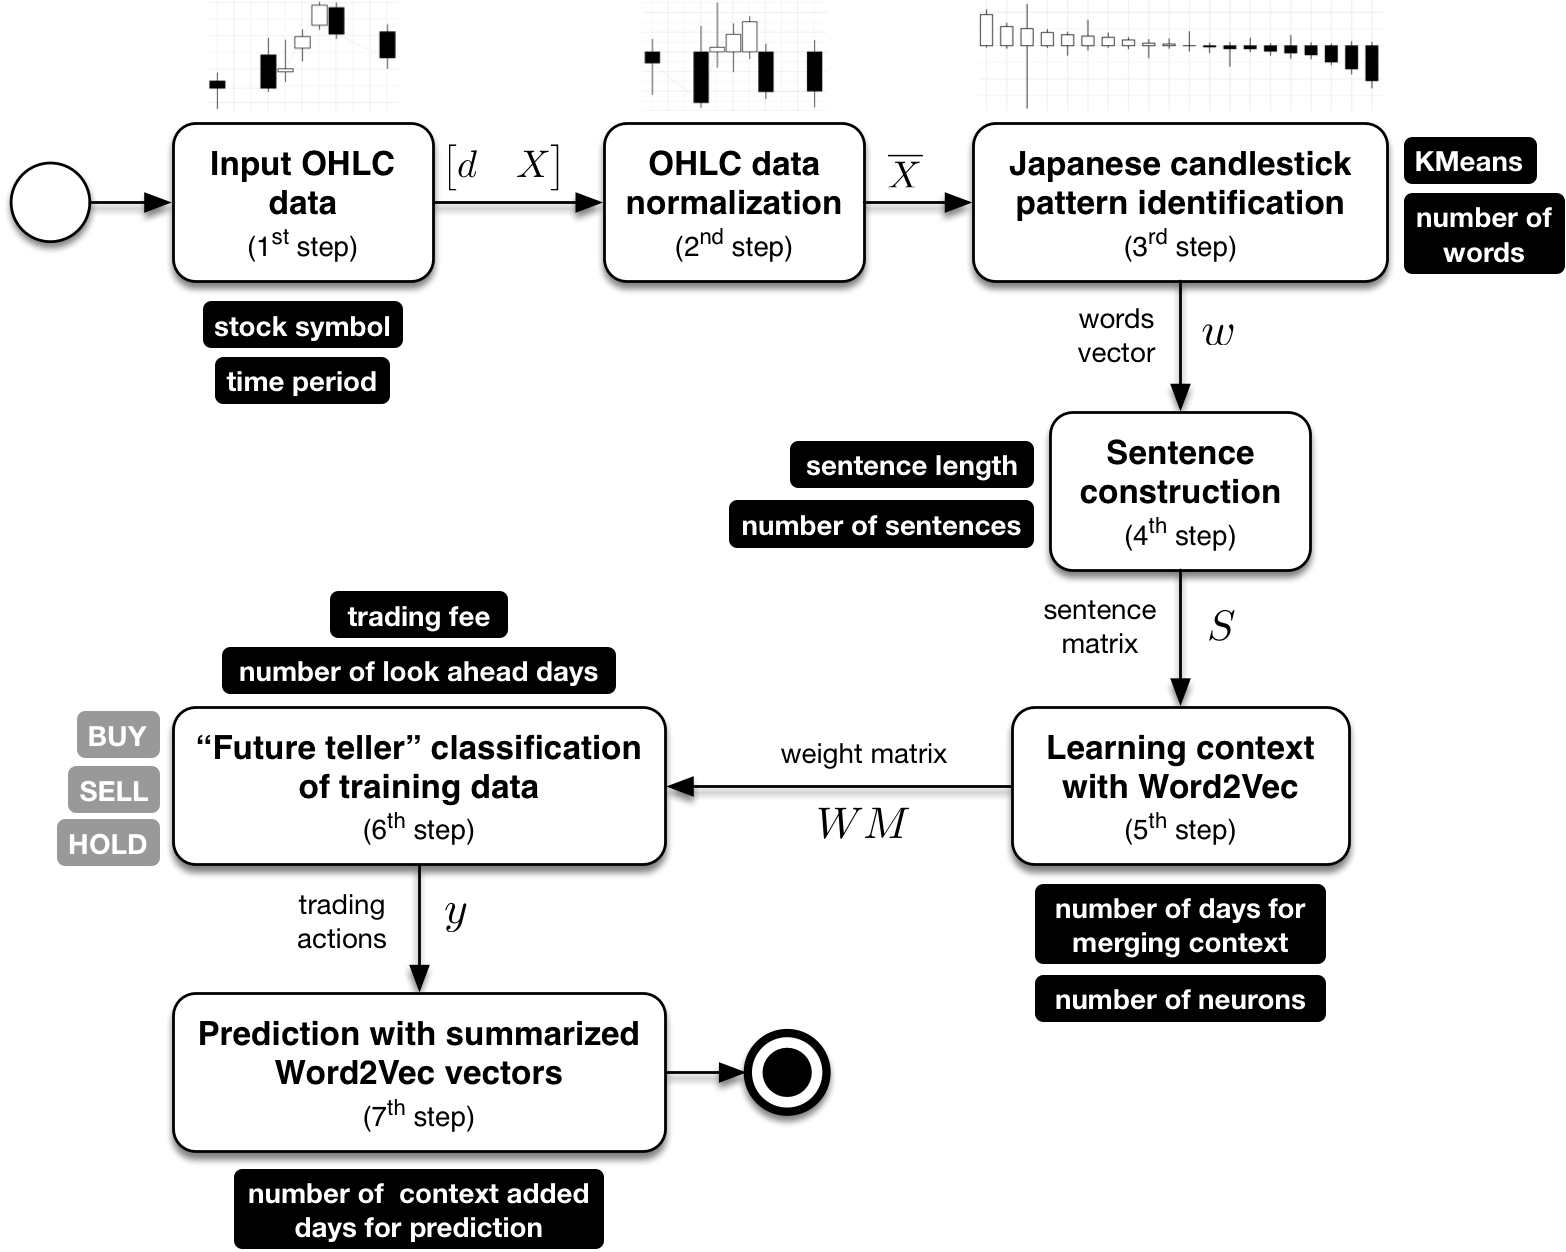 Steps of proposed forecasting model